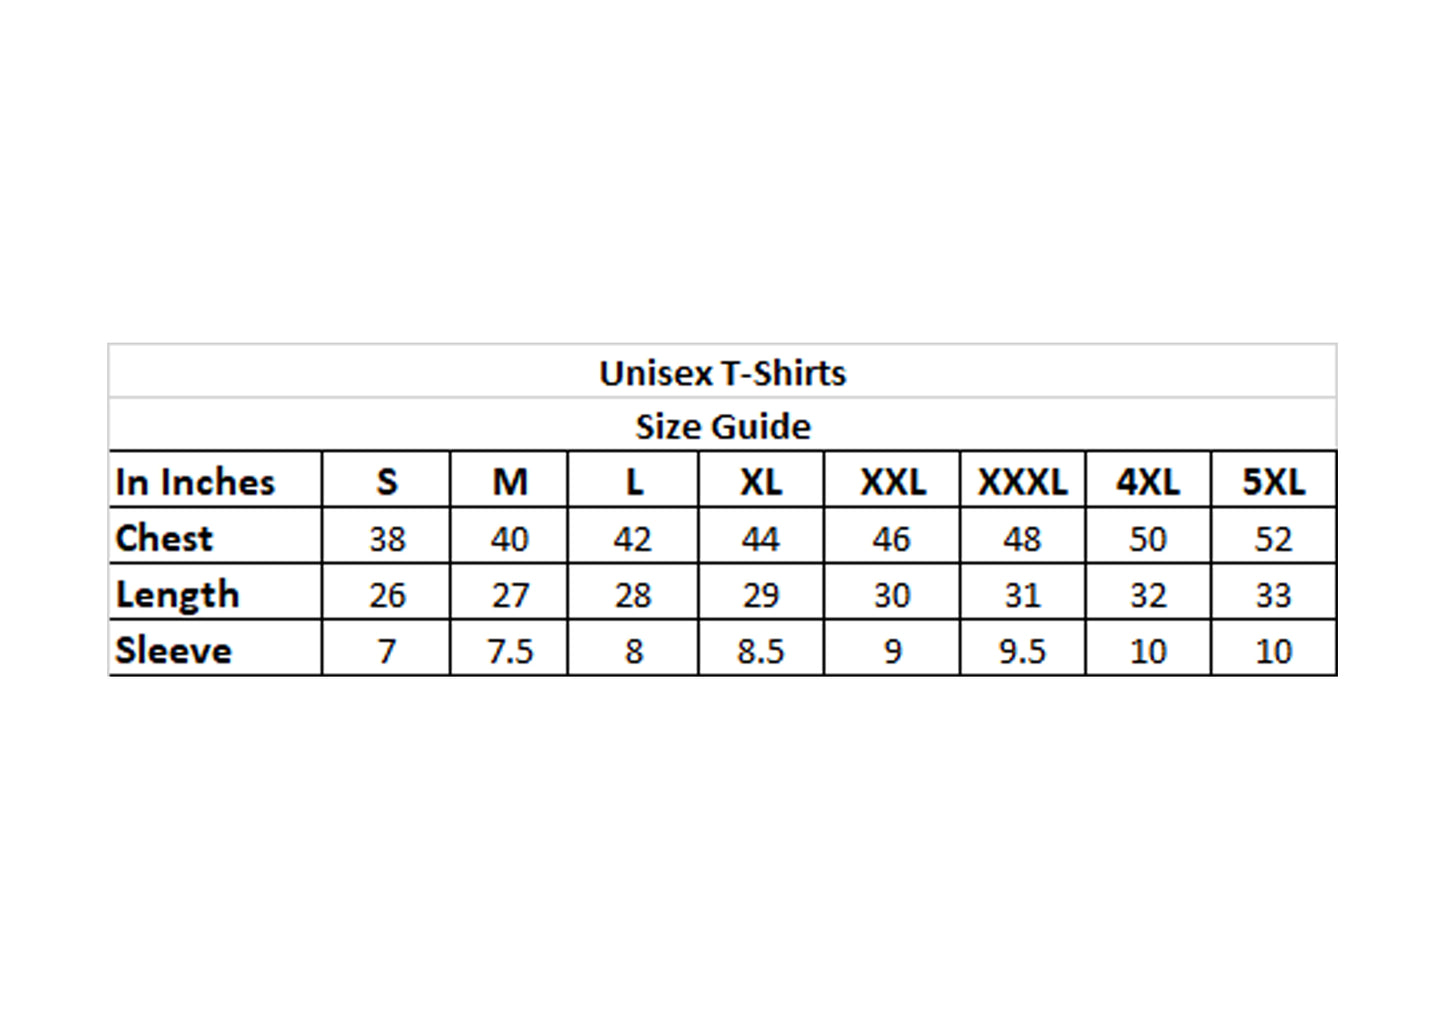 BIKINI ATOLL Seasons Unisex T-Shirt (Black)